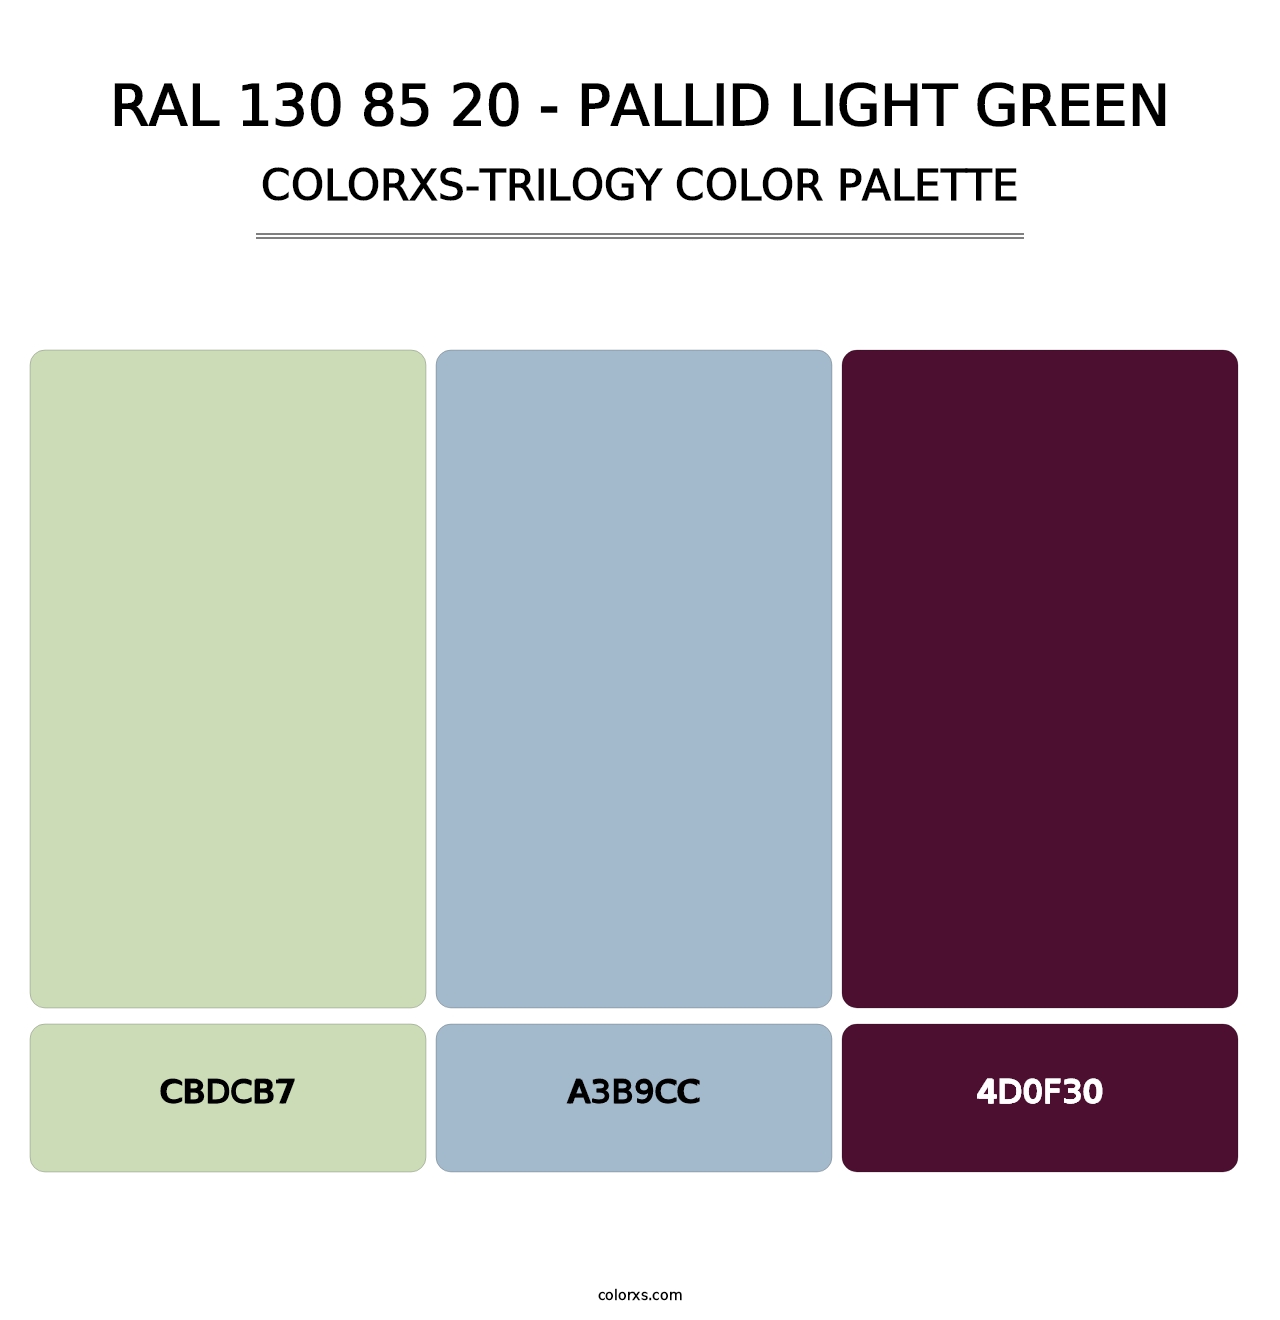 RAL 130 85 20 - Pallid Light Green - Colorxs Trilogy Palette